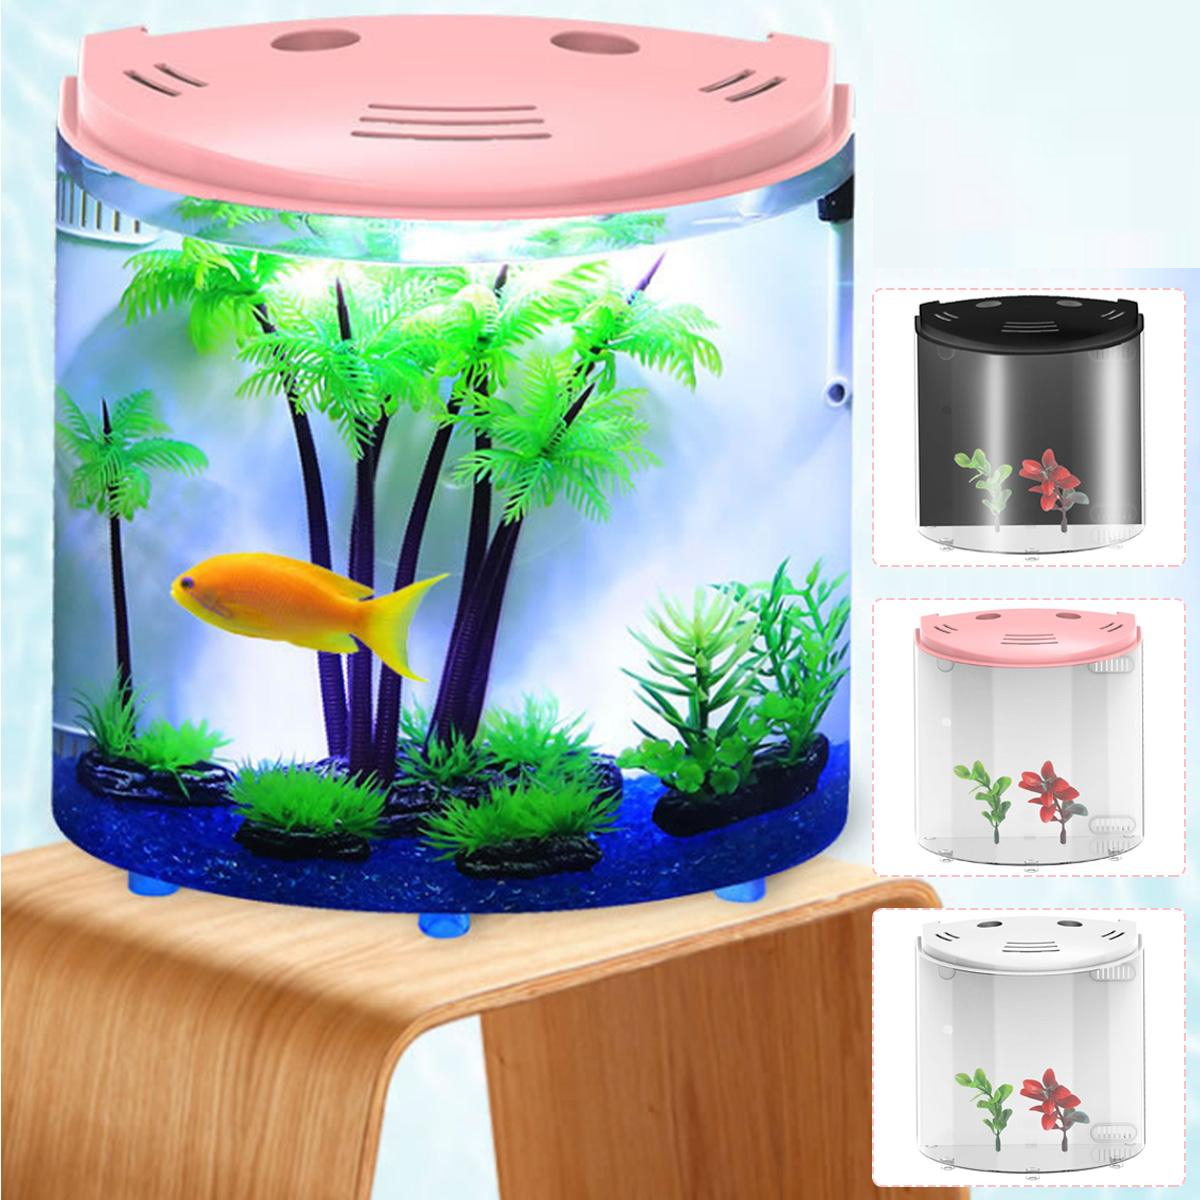 Small Fish Aquarium with USB Light